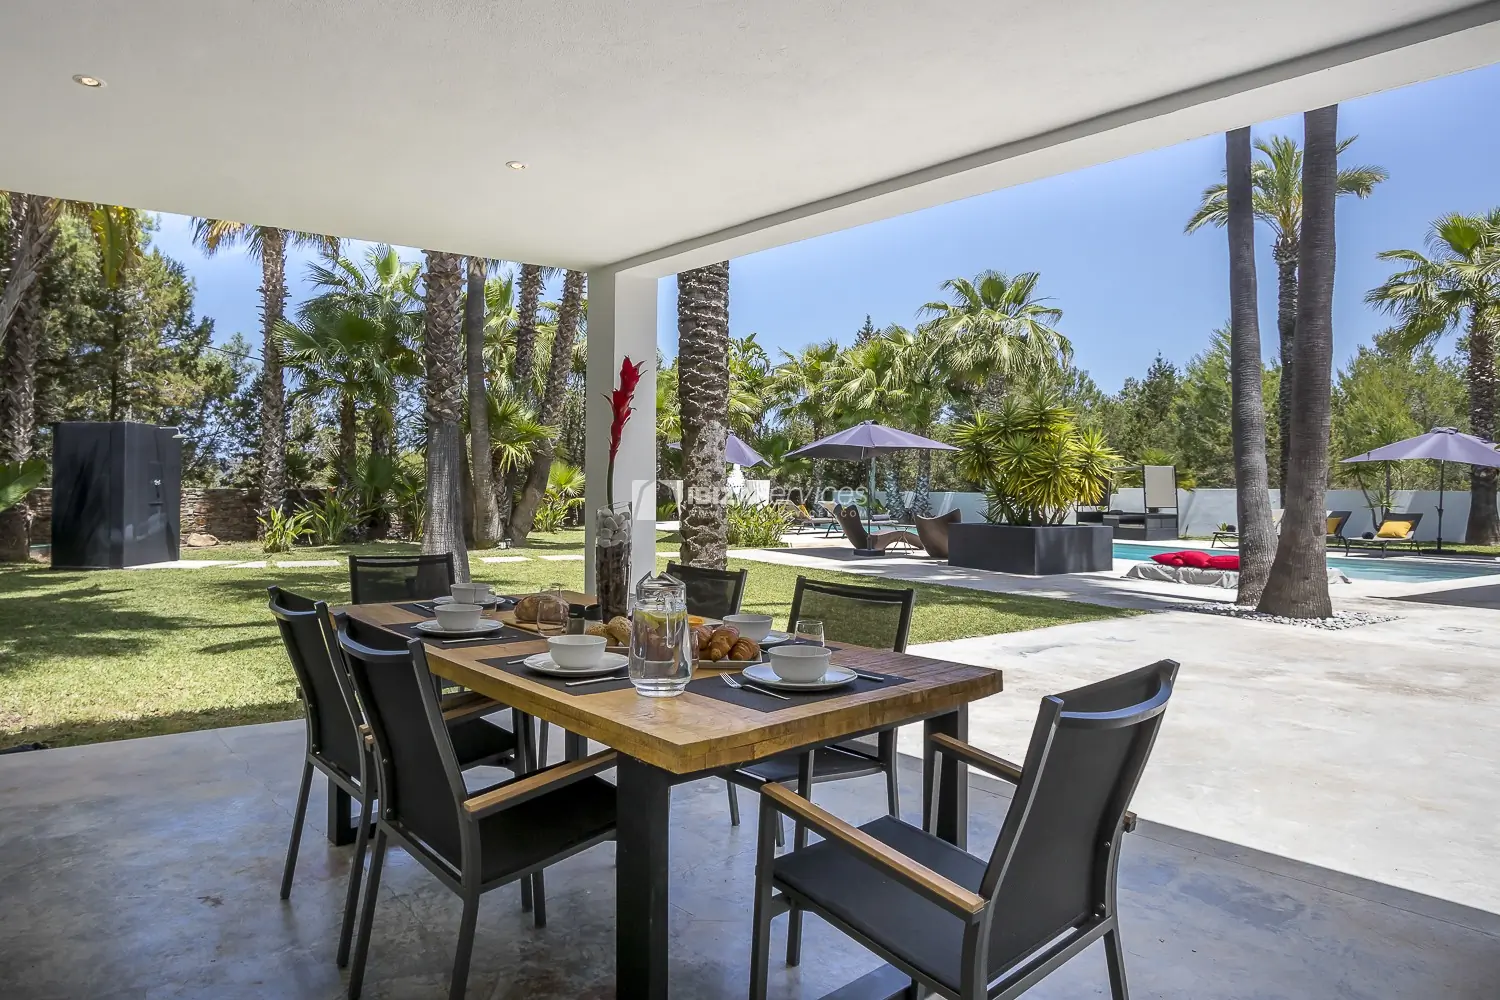 Live the dream in this modern 5 bedrooms villa in Sant Josep de sa Talaia, Ibiza